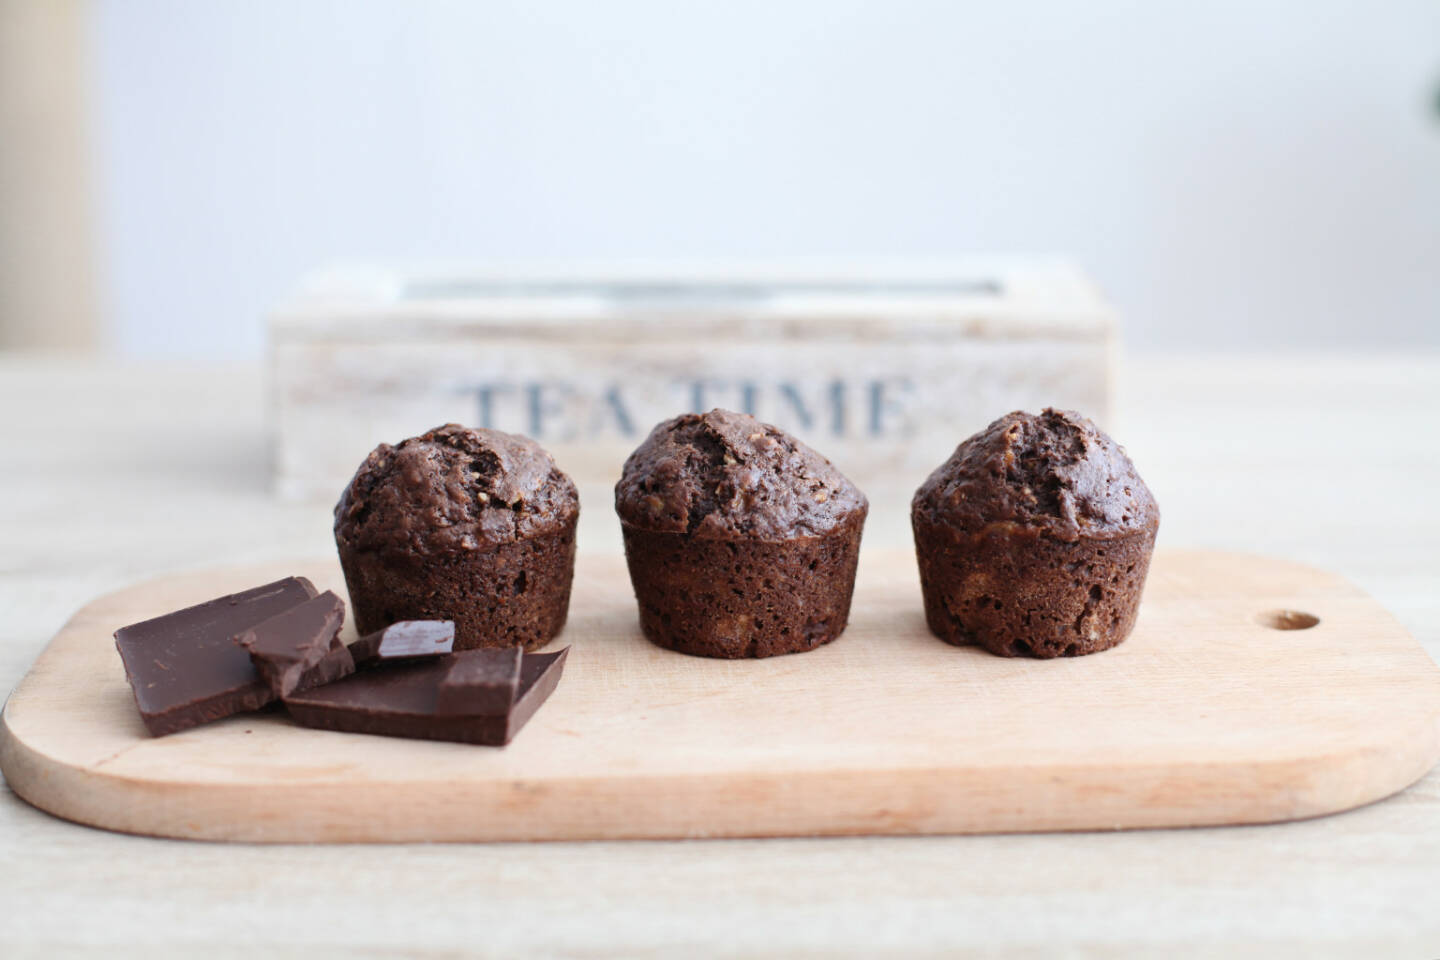 Muffins, Muffin, Schokolade http://www.shutterstock.com/de/pic-244675369/stock-photo-chocolate-muffins-on-wooden-board-tea-time.html